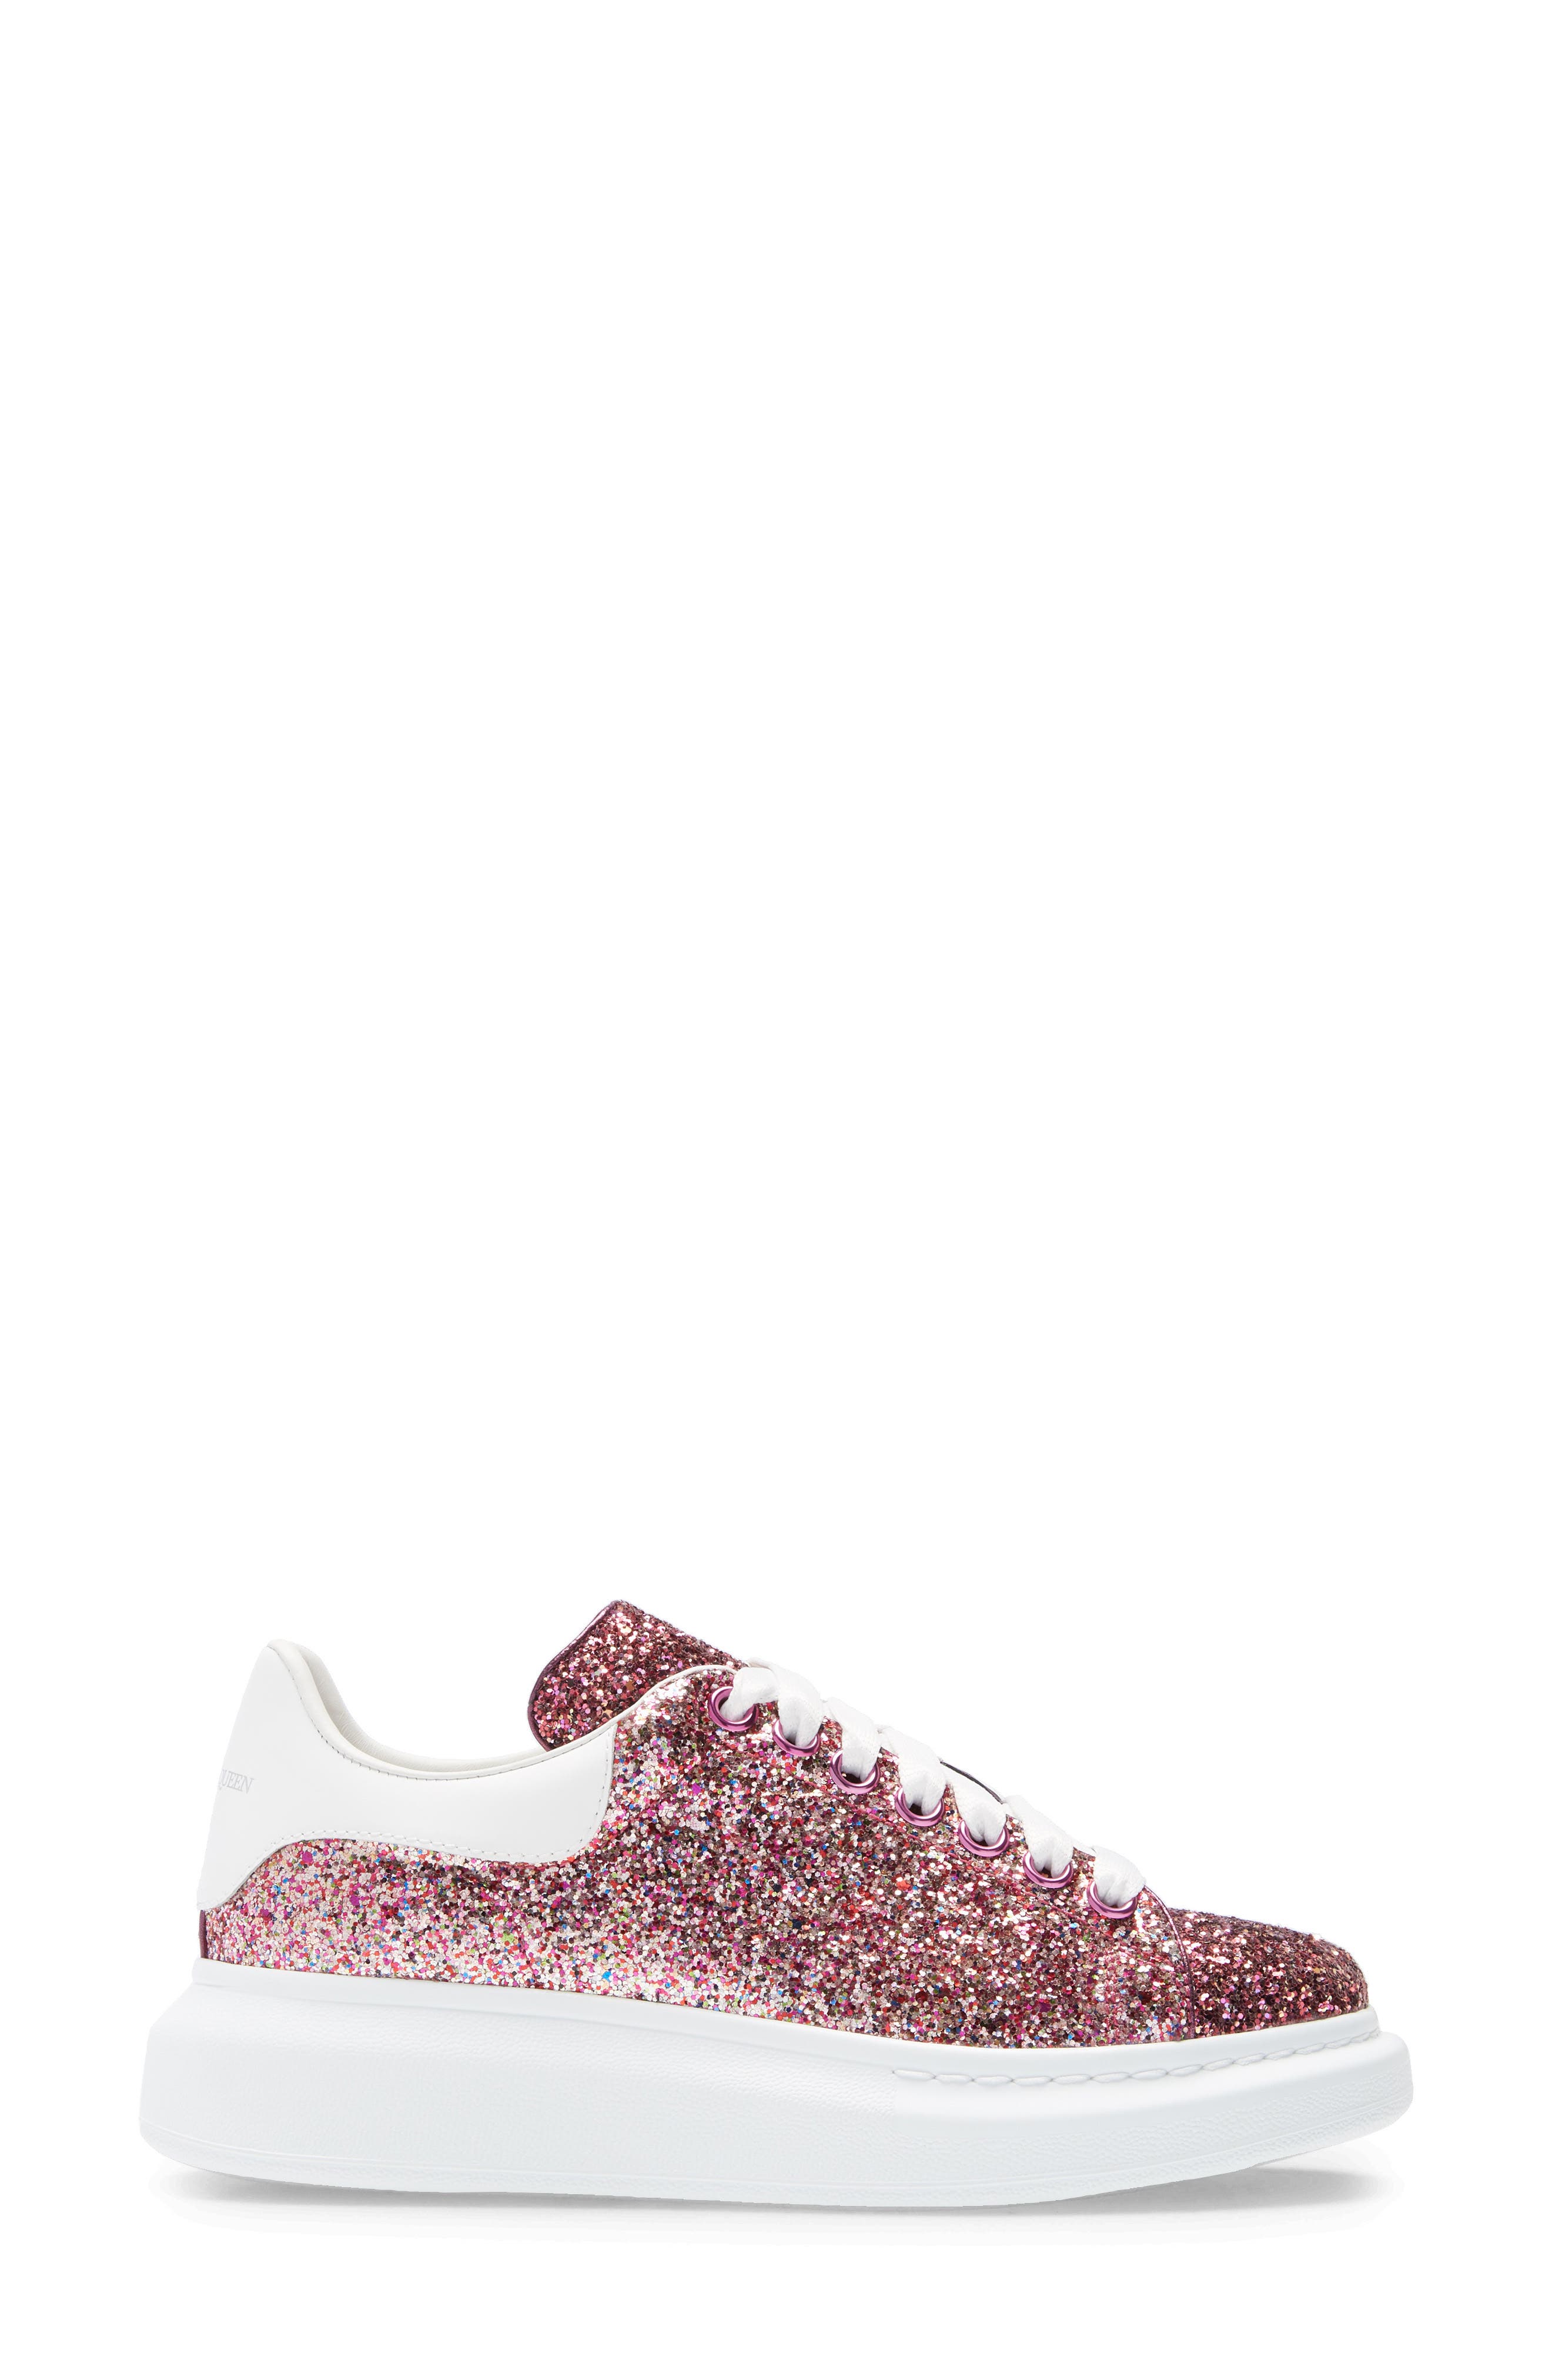 alexander mcqueen sparkle shoes